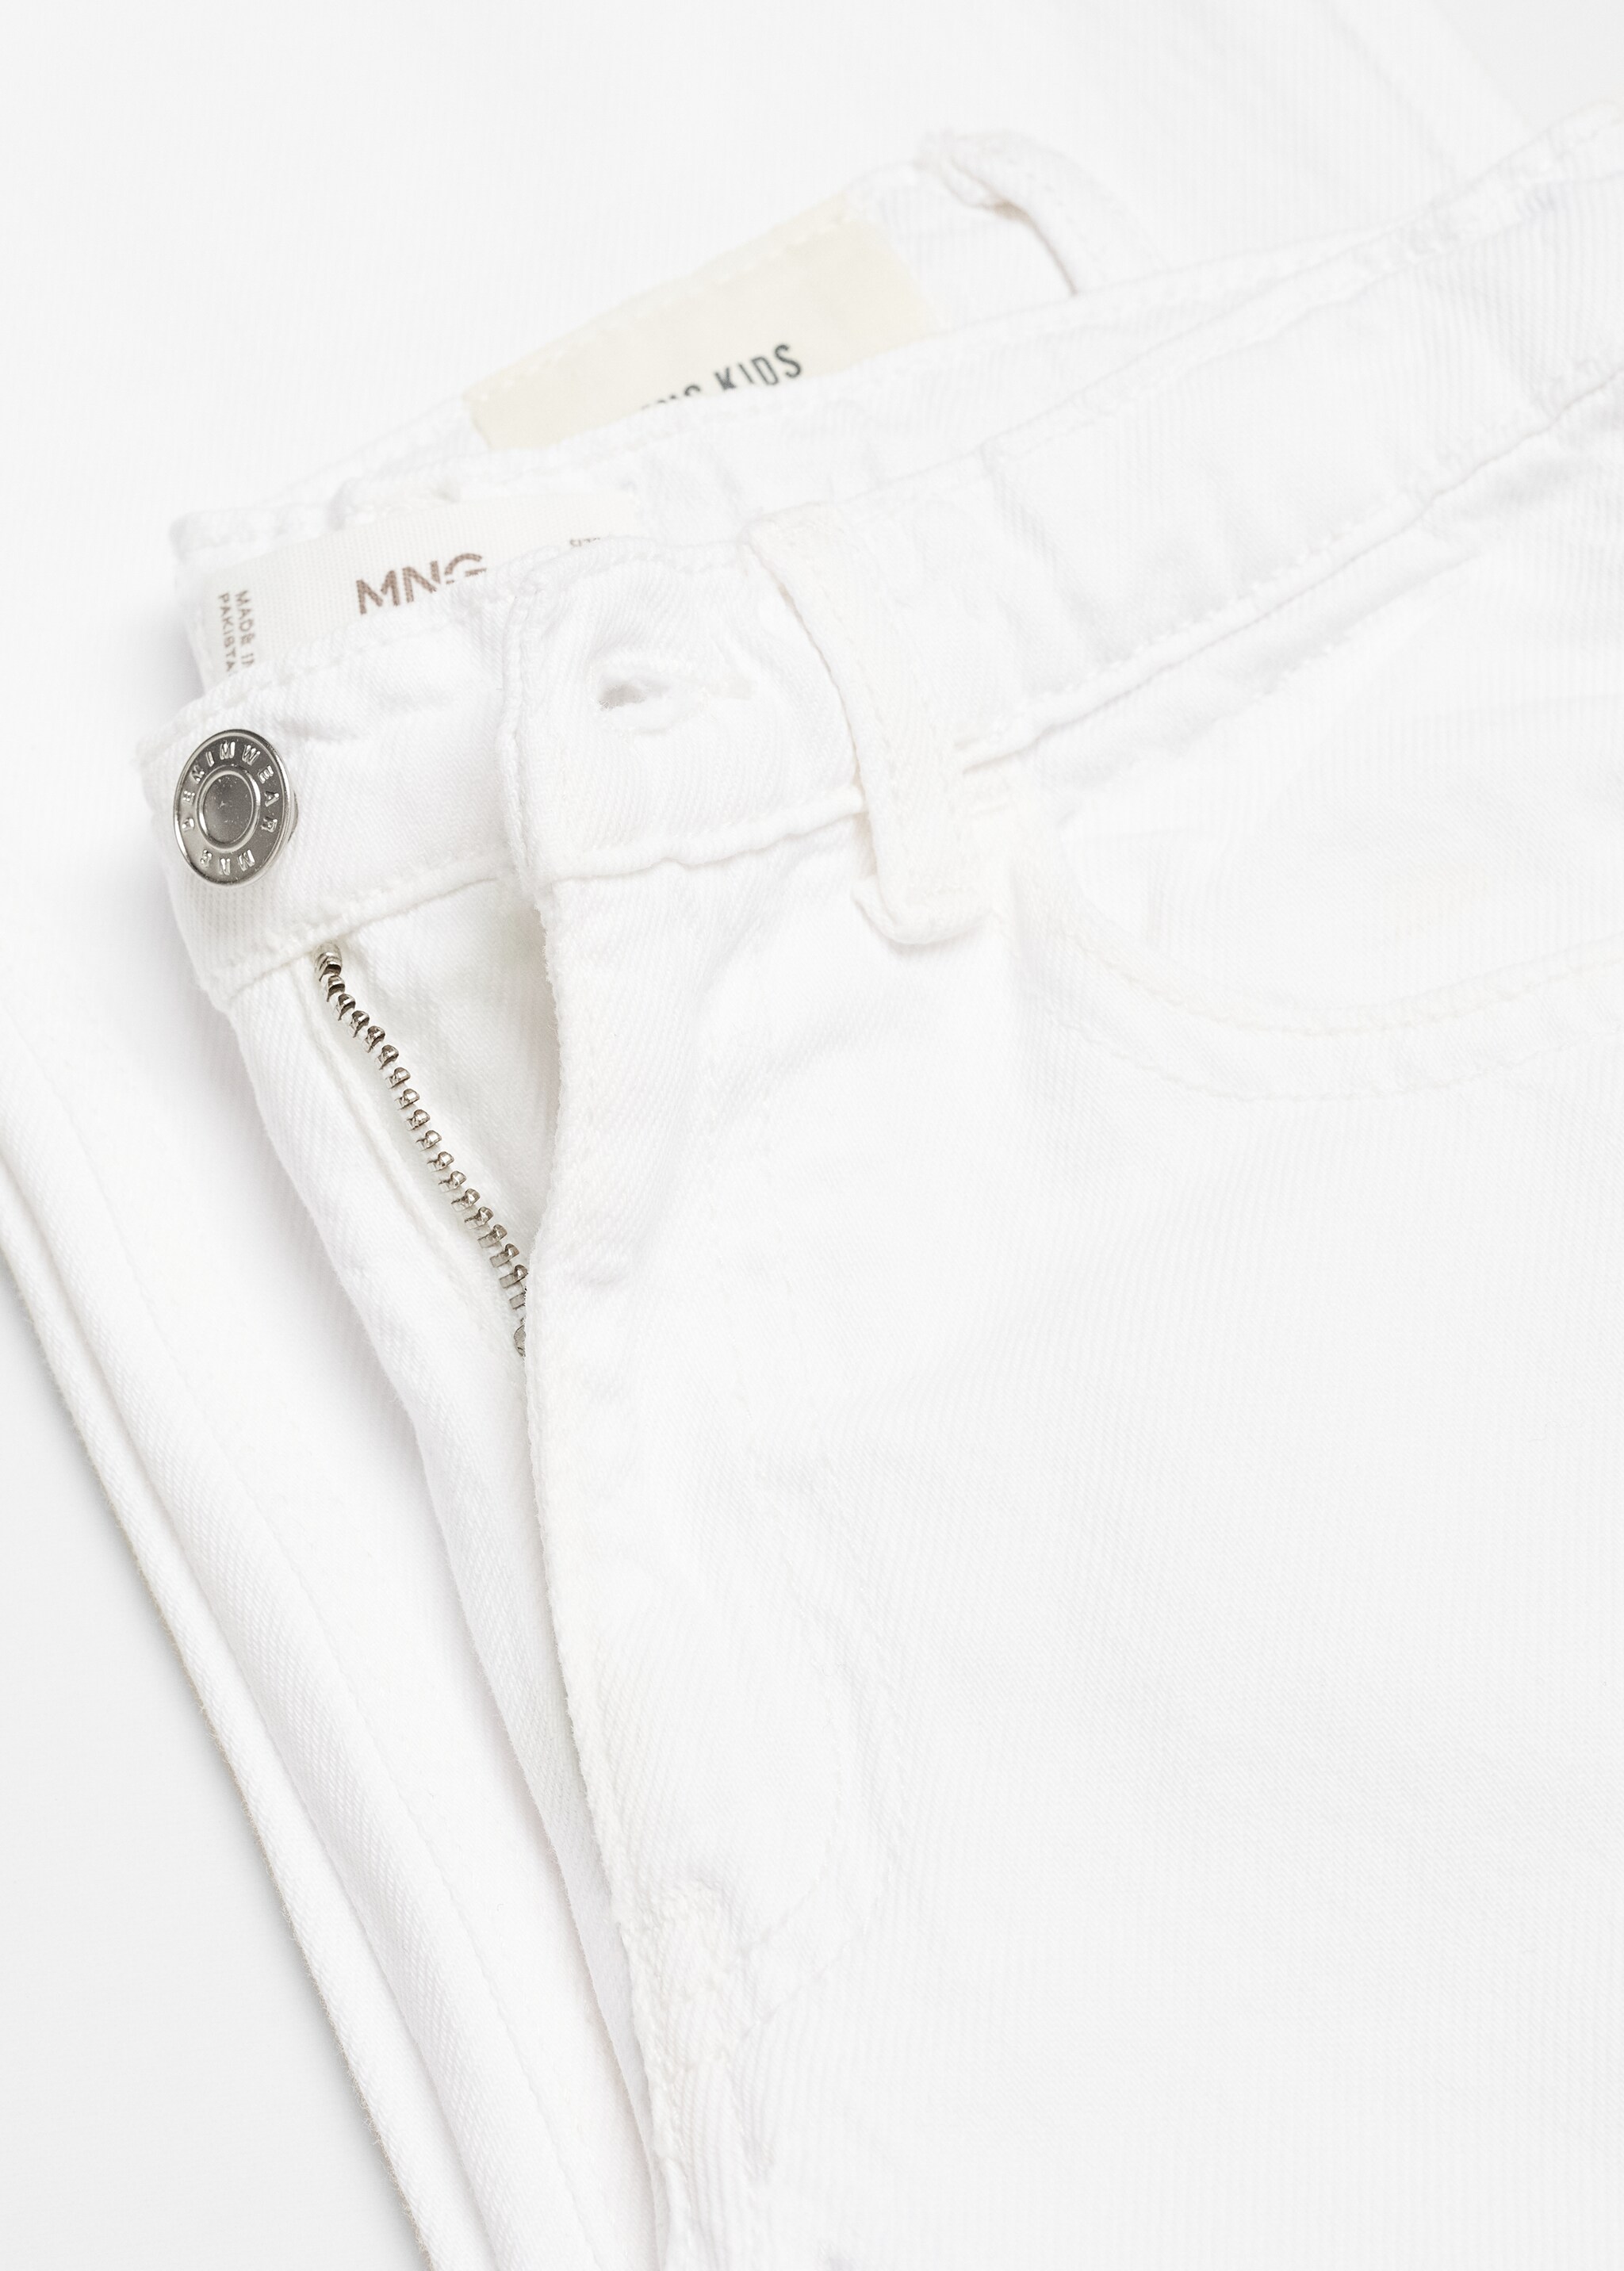 Cotton culotte jeans - Details of the article 8